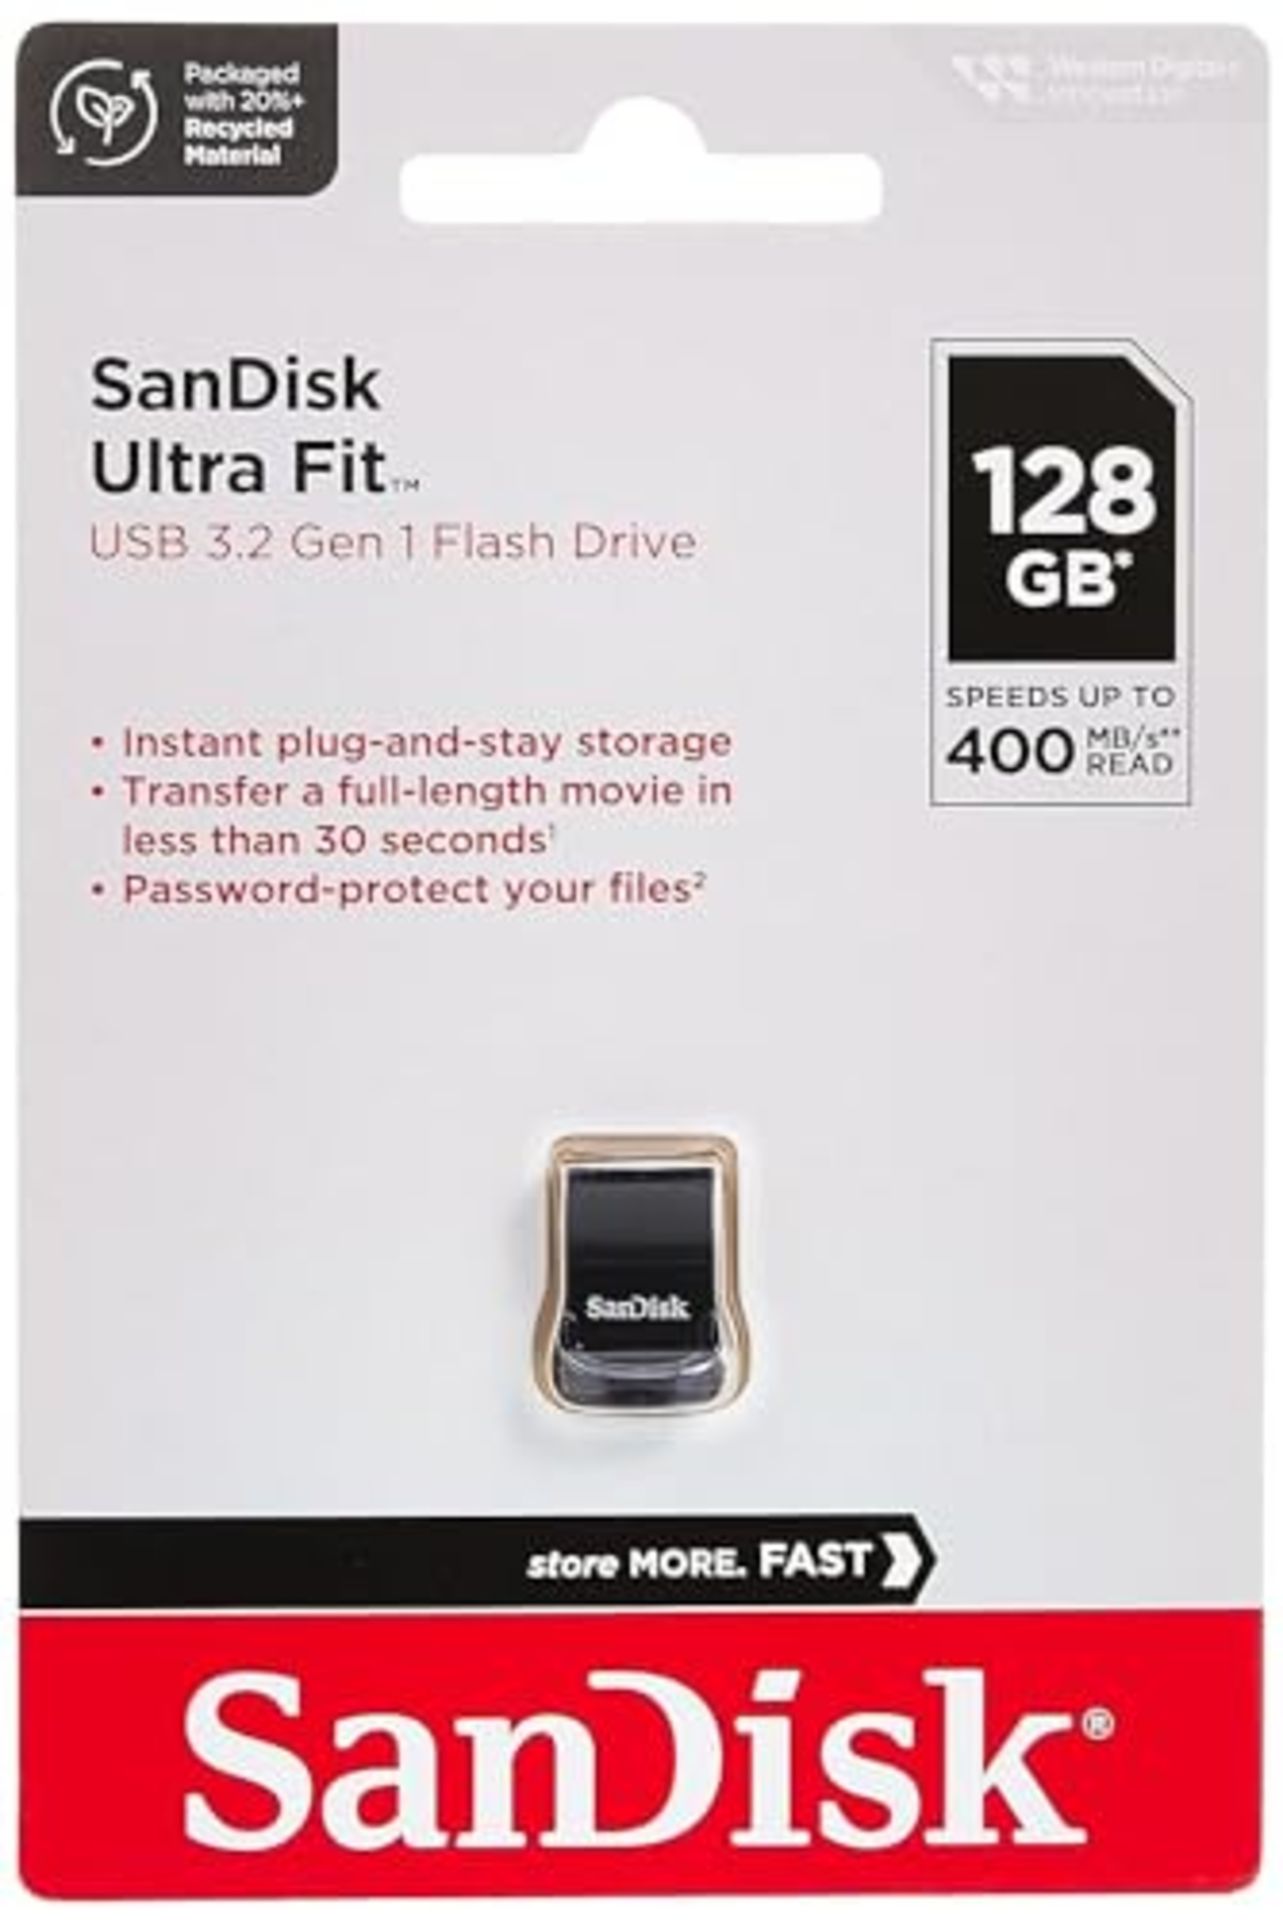 SanDisk 128GB Ultra Fit, USB 3.2, USB Flash Drive, speeds up to 400MB/s.